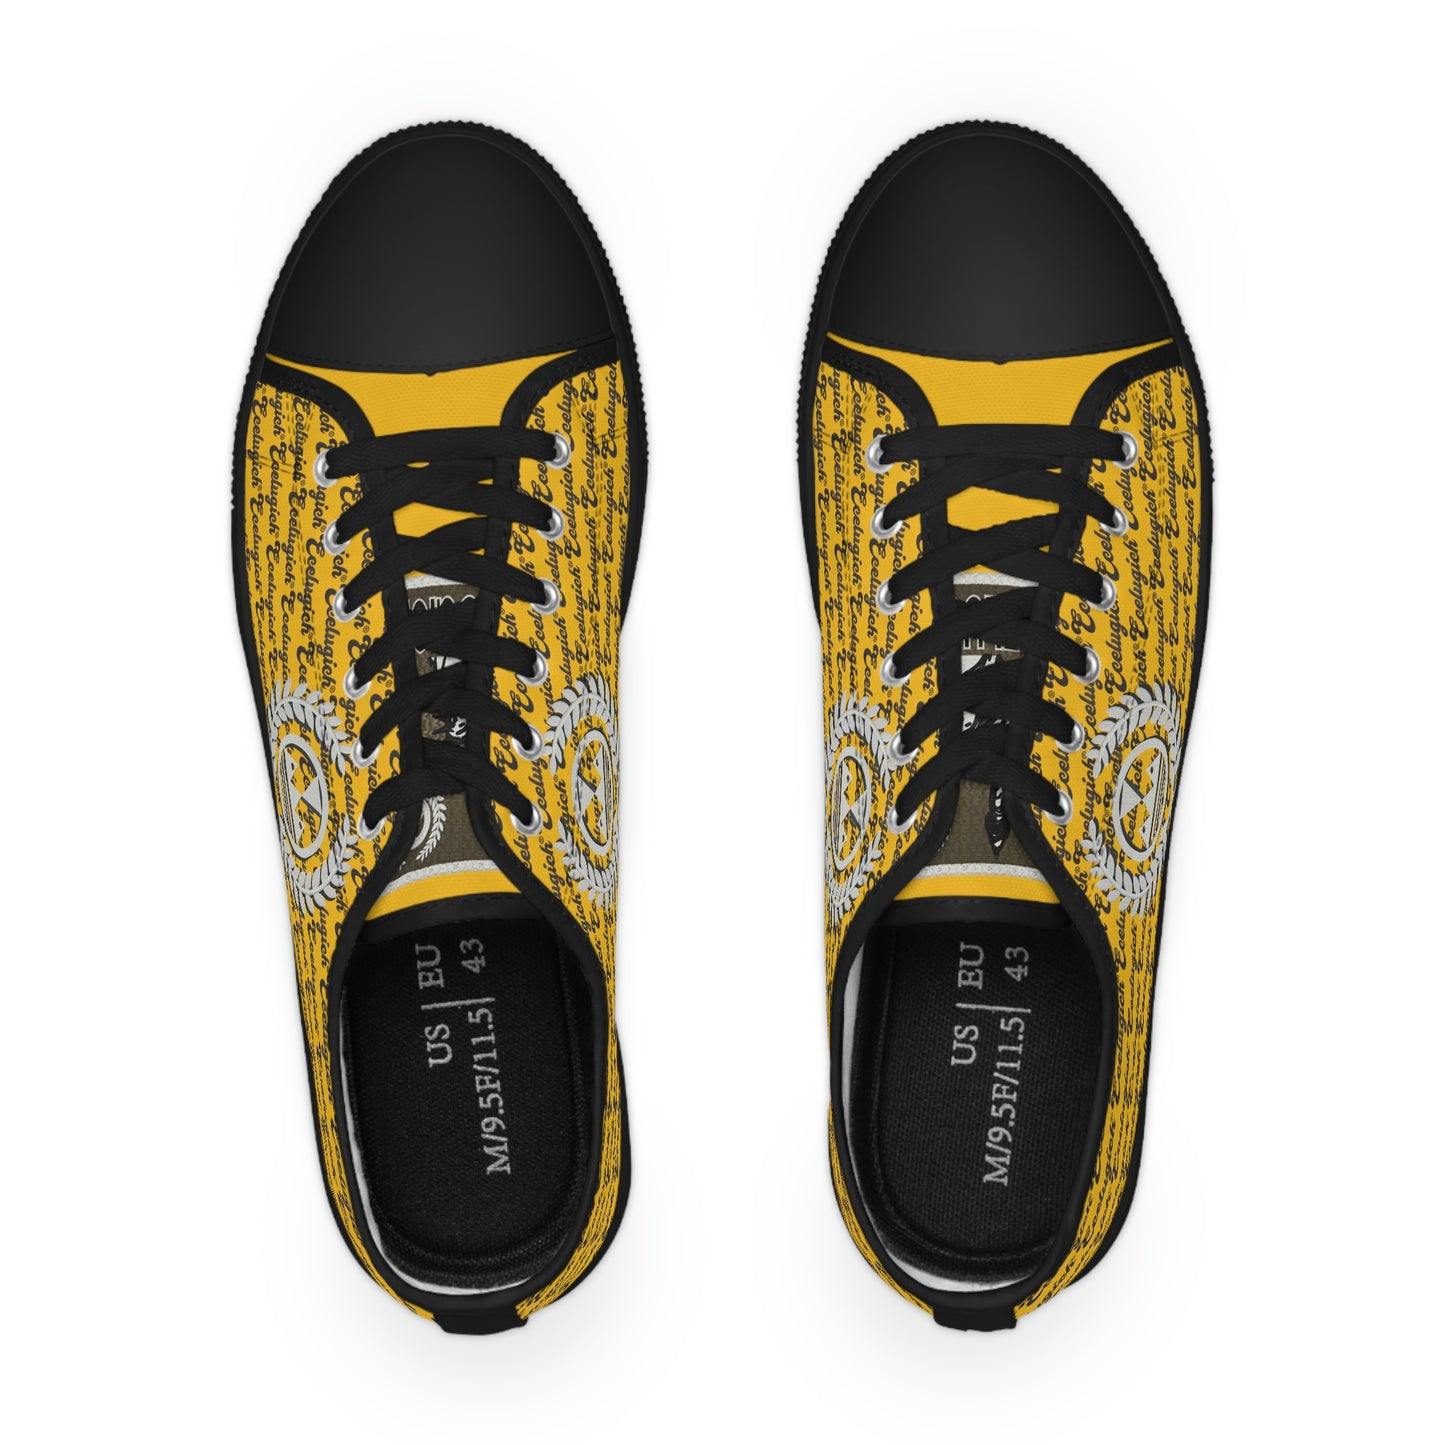 Ecelugich Yellow Men's Low Top Sneakers